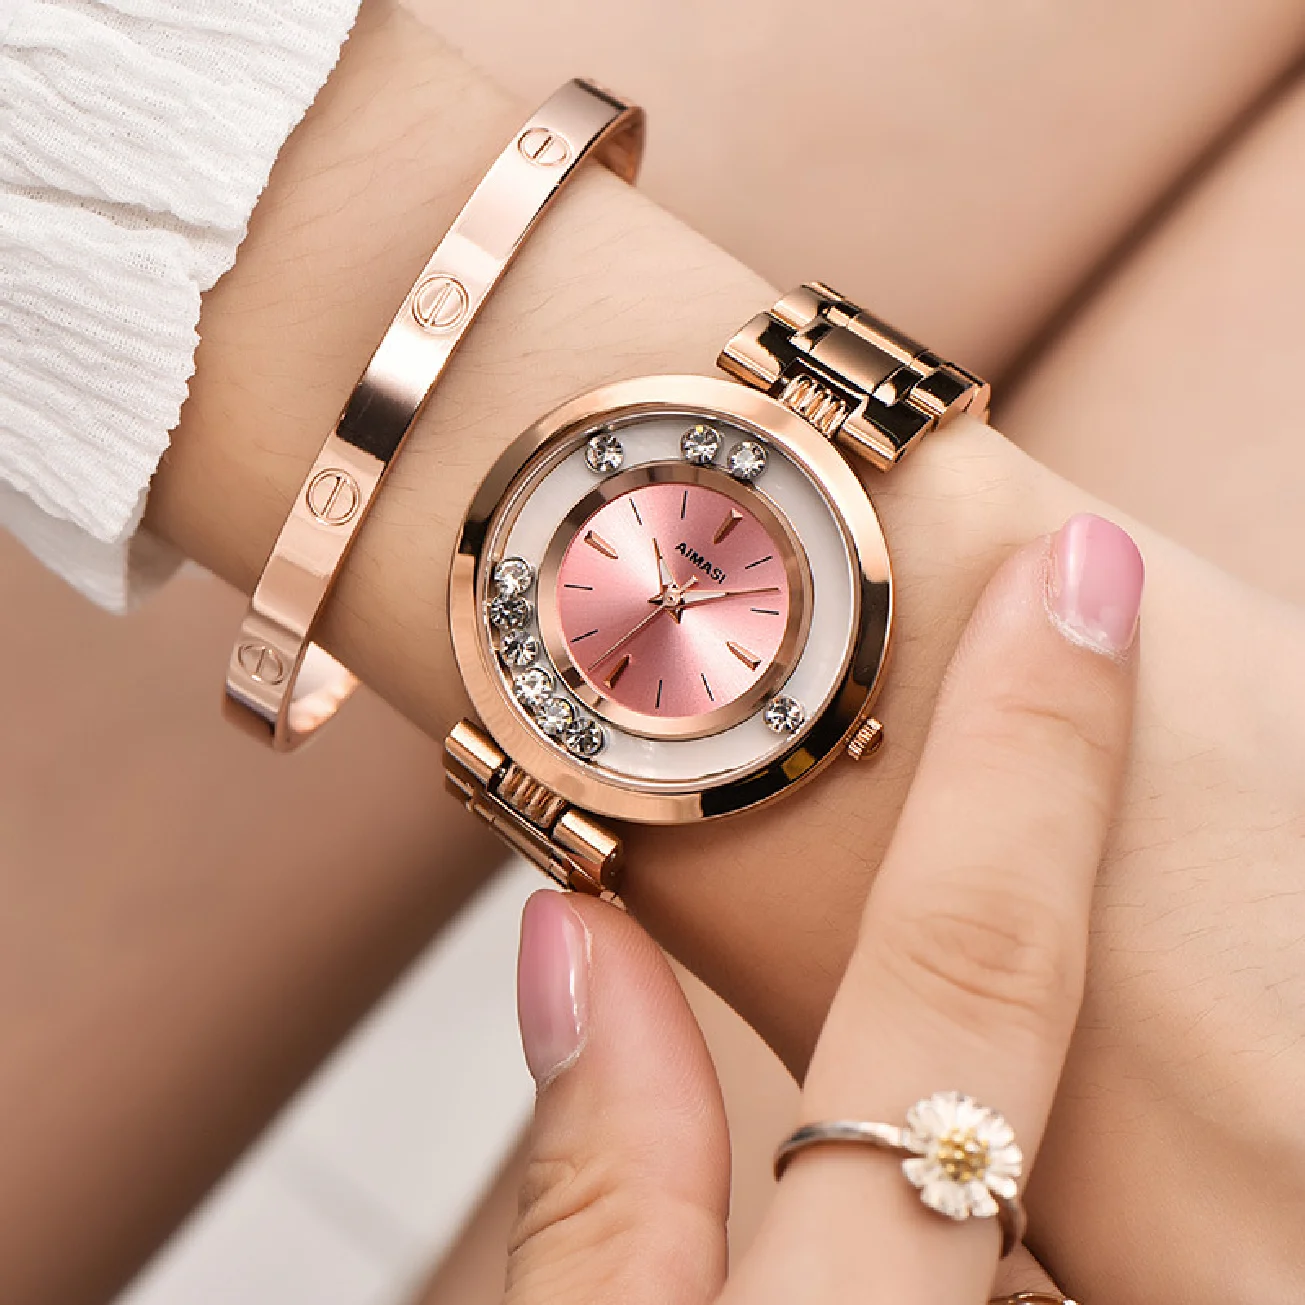 AIMASI Brand Women's Watches Ladies Fashion Luxury Rose Gold Stainless Steel Watches Ball crystal Women Rhinestone Clocks saat enlarge